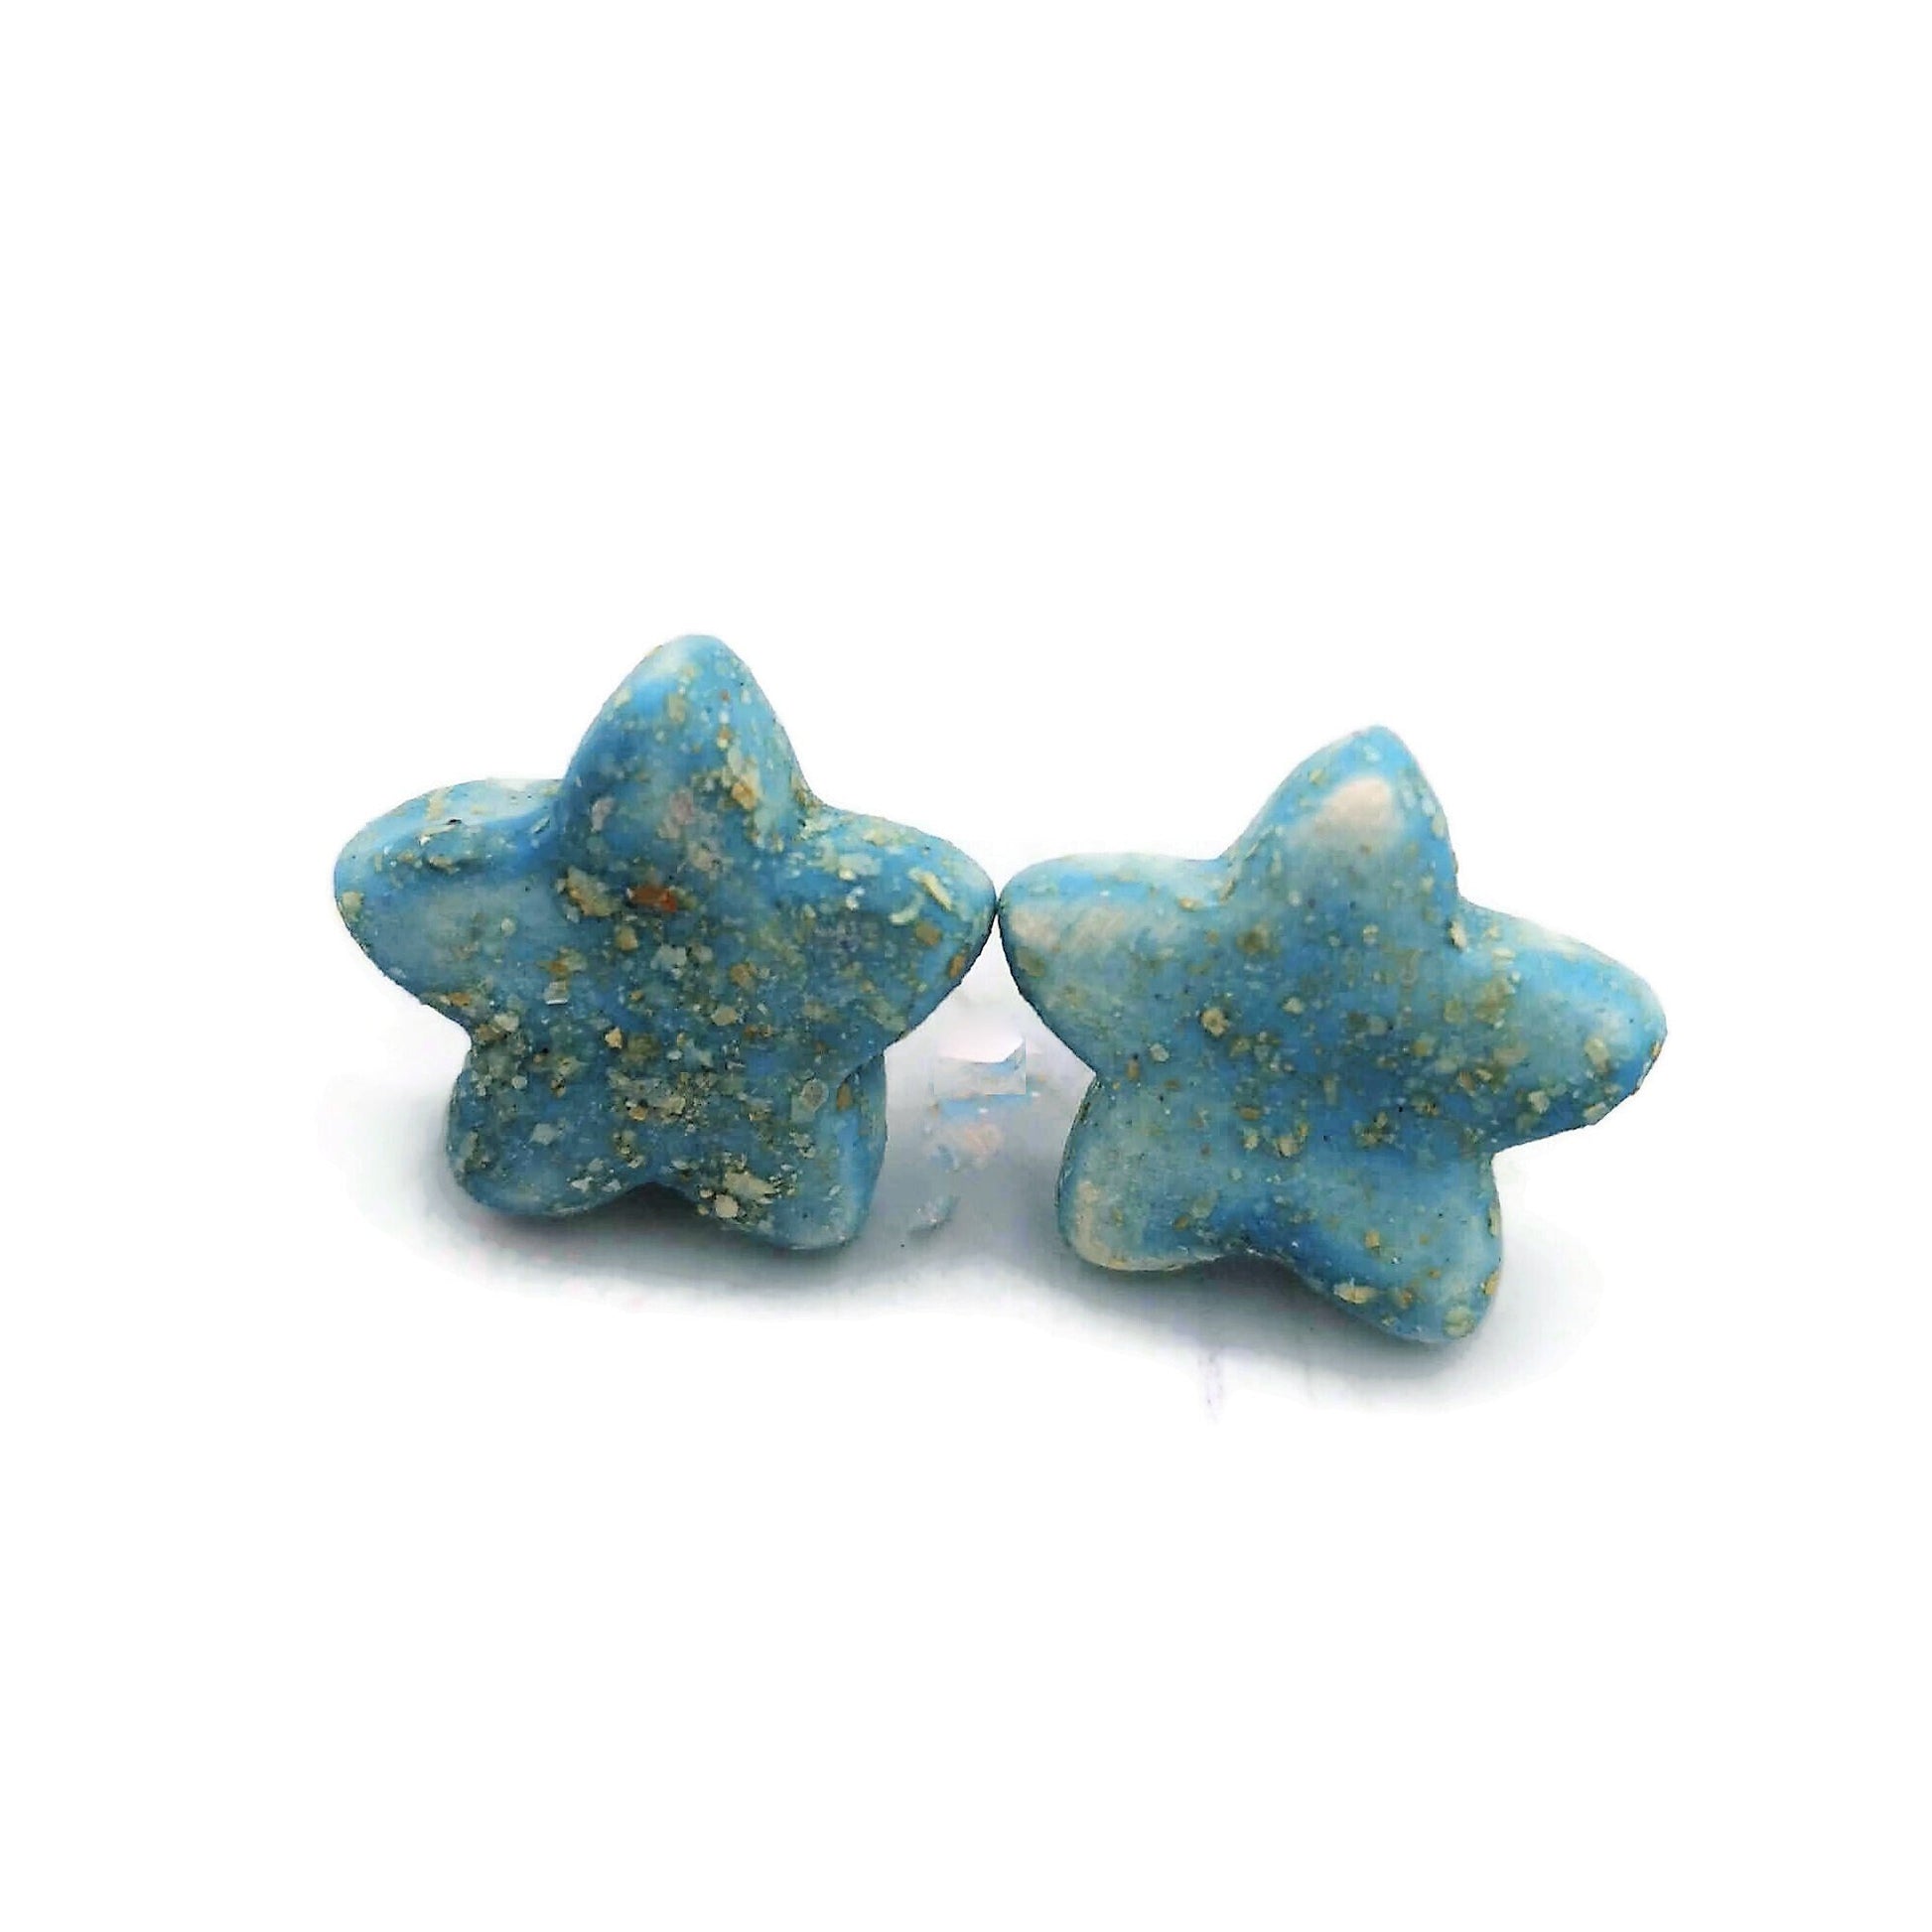 DAINTY STAR EARRINGS, Turquoise Studs, Geometric Star Earrings, Minimalist Clay Stud Earrings Small, Handmade Ceramic Stocking Stuffers - Ceramica Ana Rafael